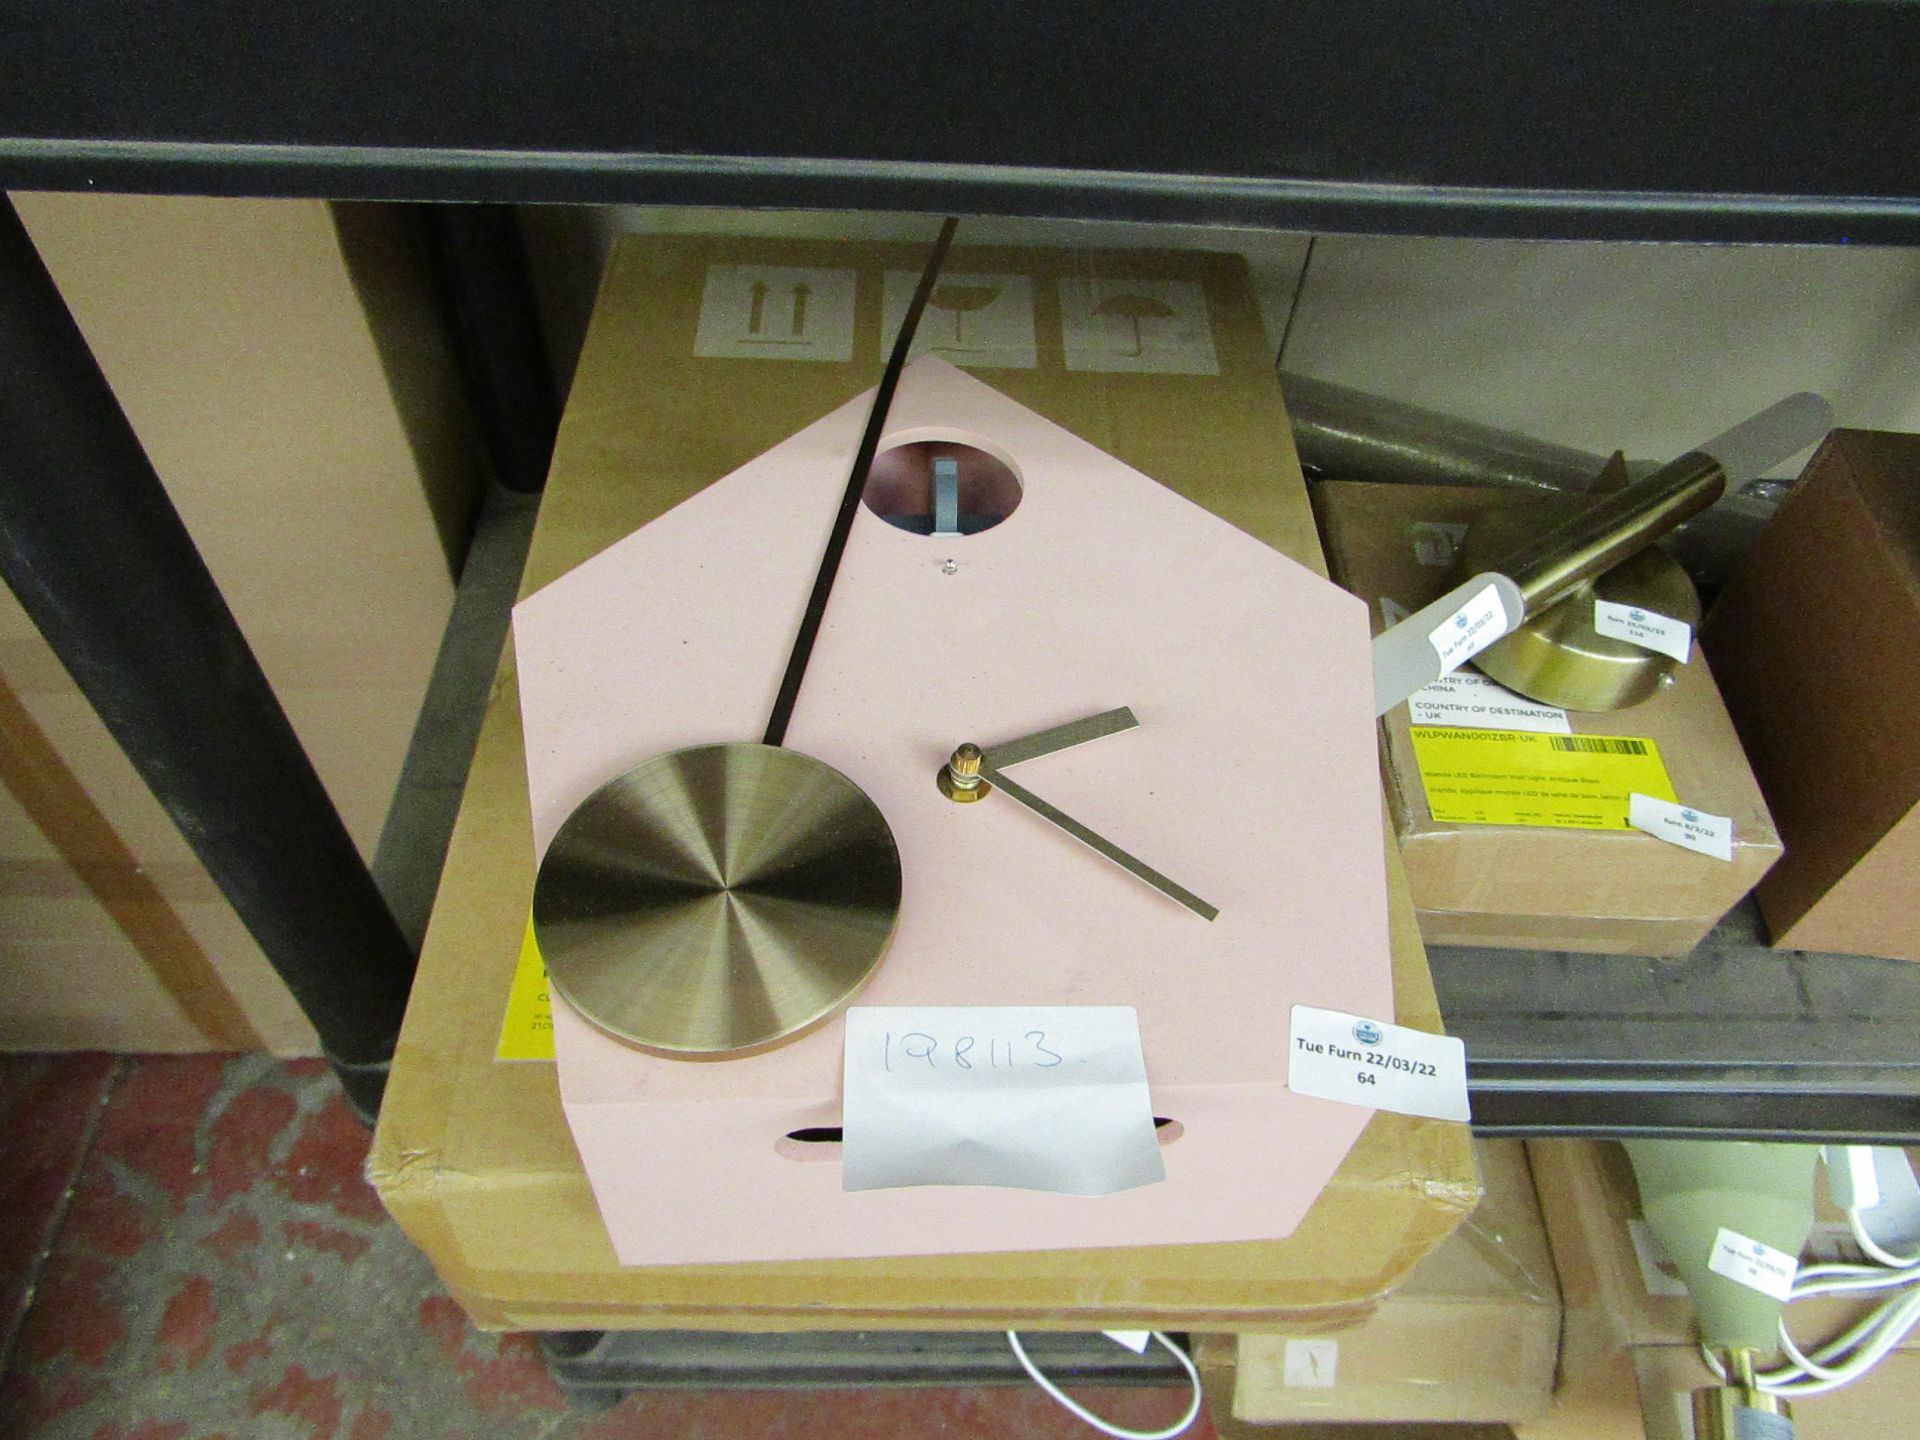 1 x Made.com Lark Cuckoo Clock Blush Pink & Brass RRP £85 SKU MAD-CLKLAR002PNK-UK TOTAL RRP £85 This